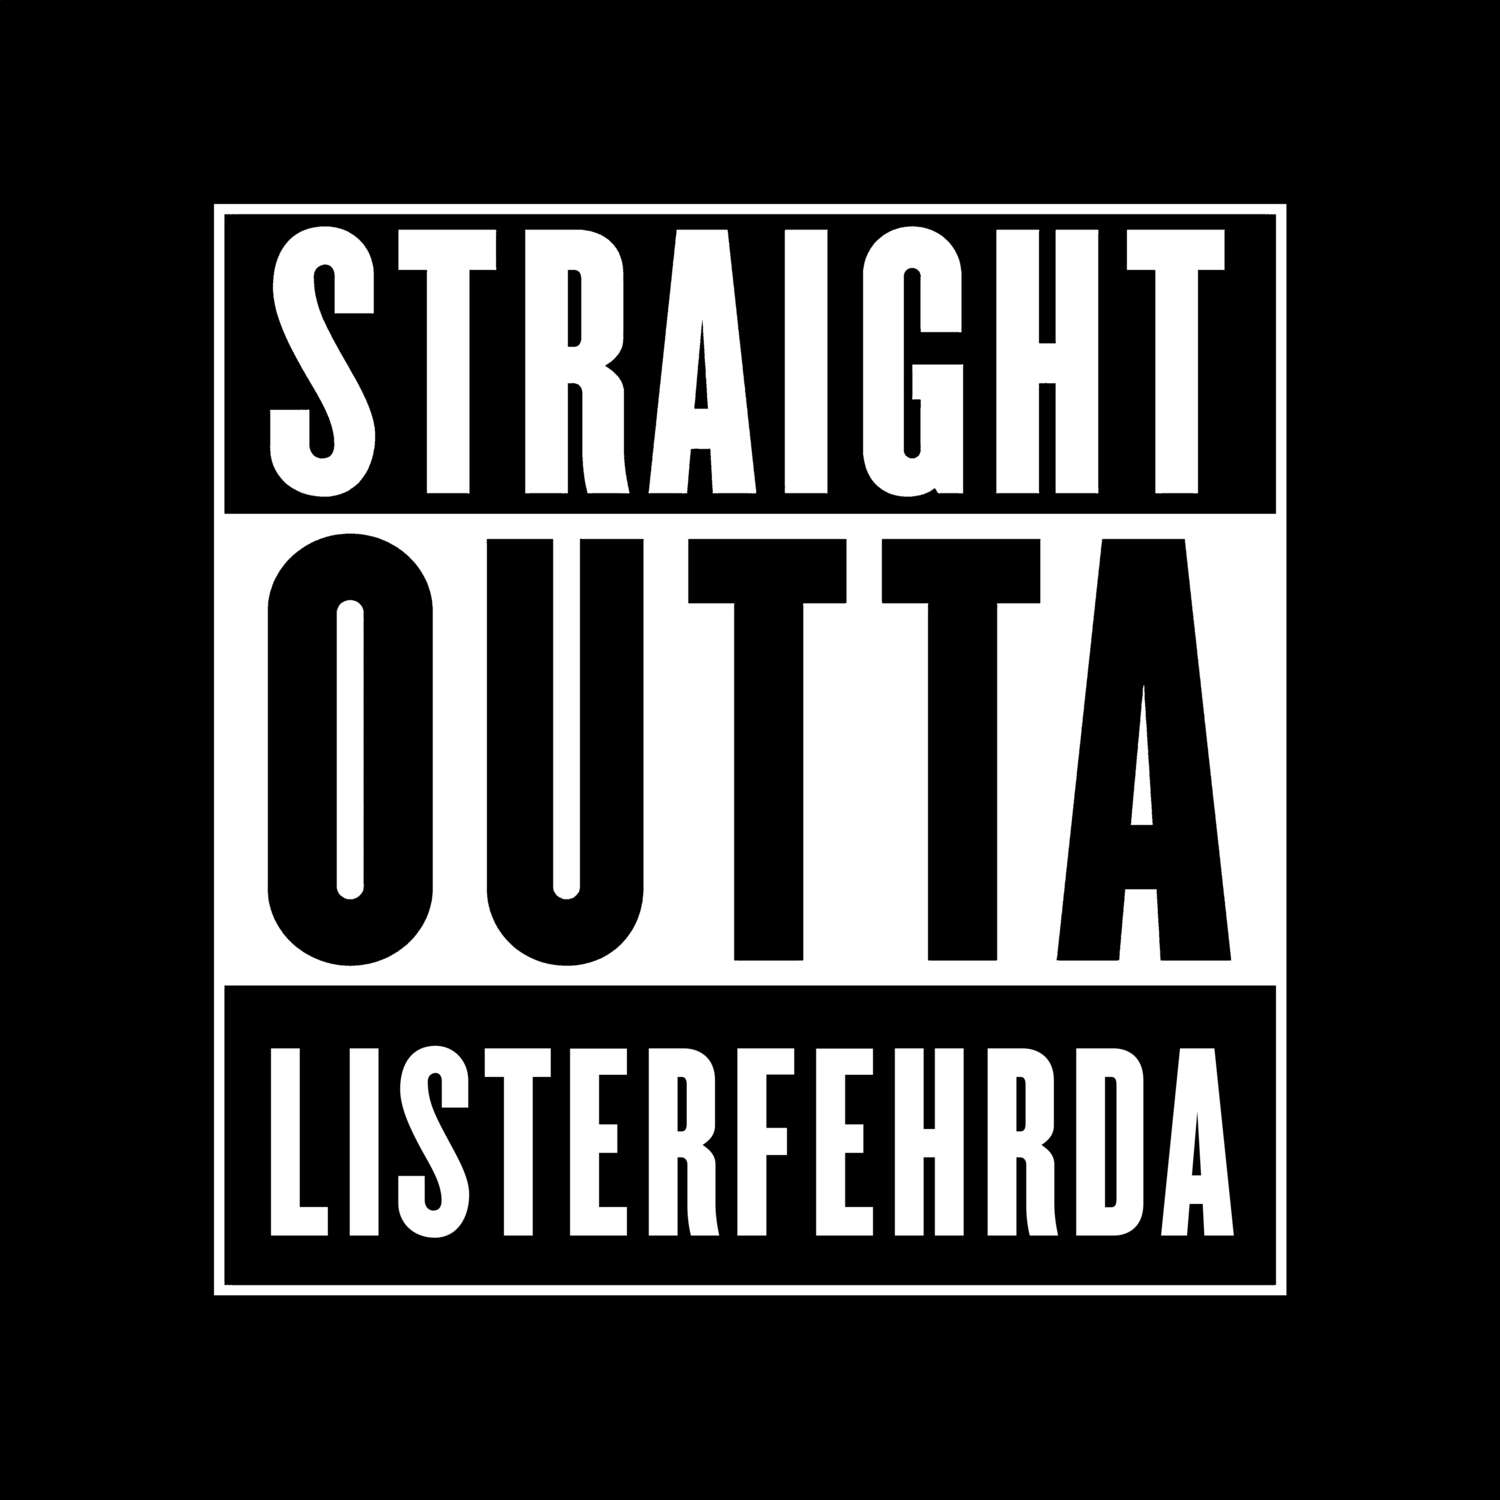 Listerfehrda T-Shirt »Straight Outta«